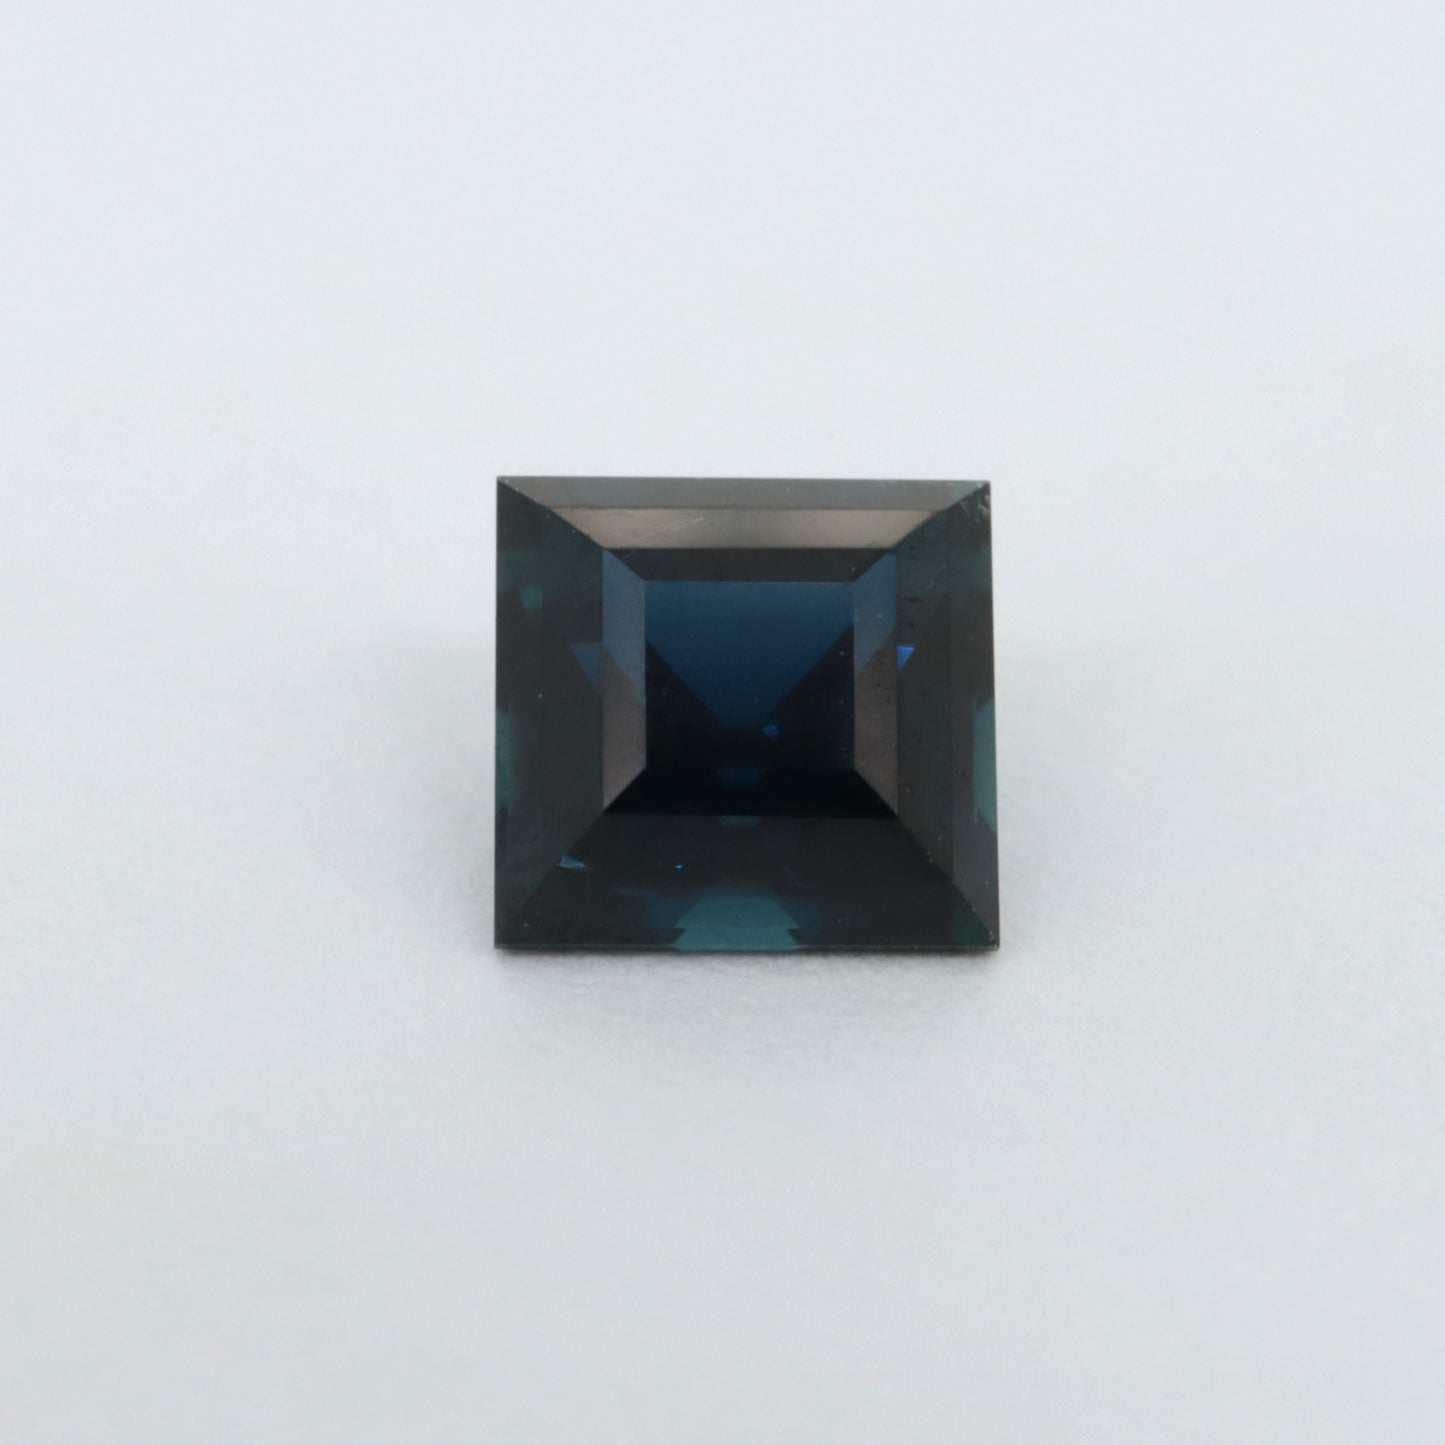 0.7ct  blue sapphire square cut